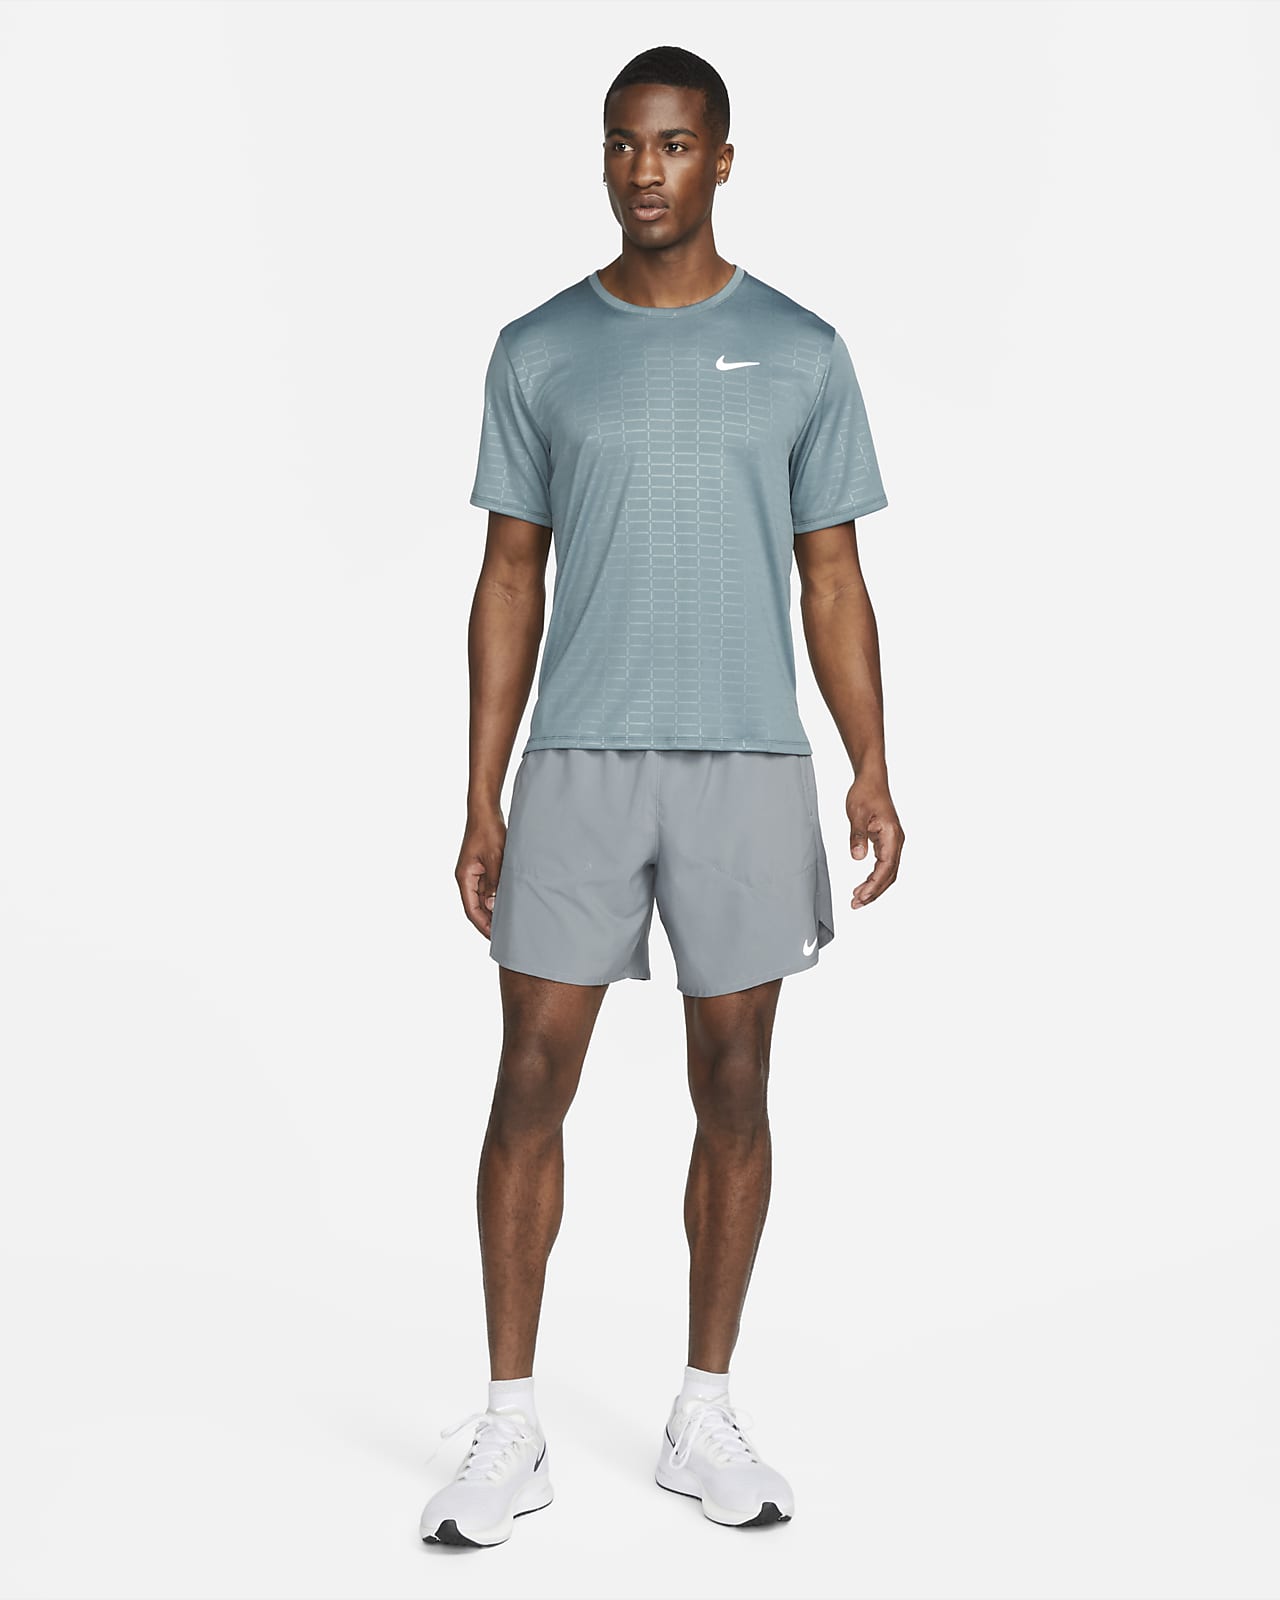 Green Shorts. Nike CA